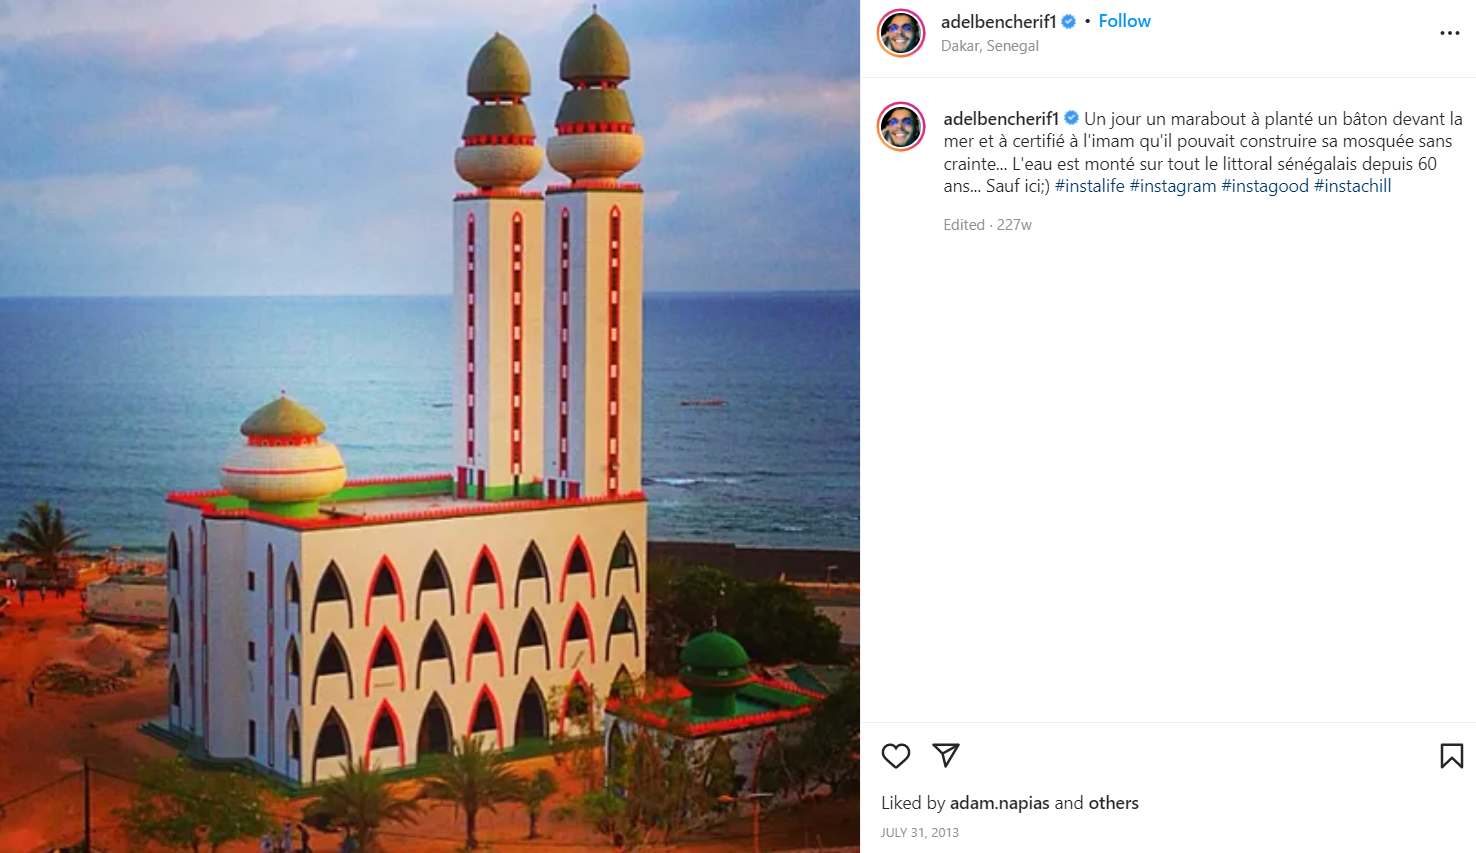 Adel Bencherif's first Instagram post